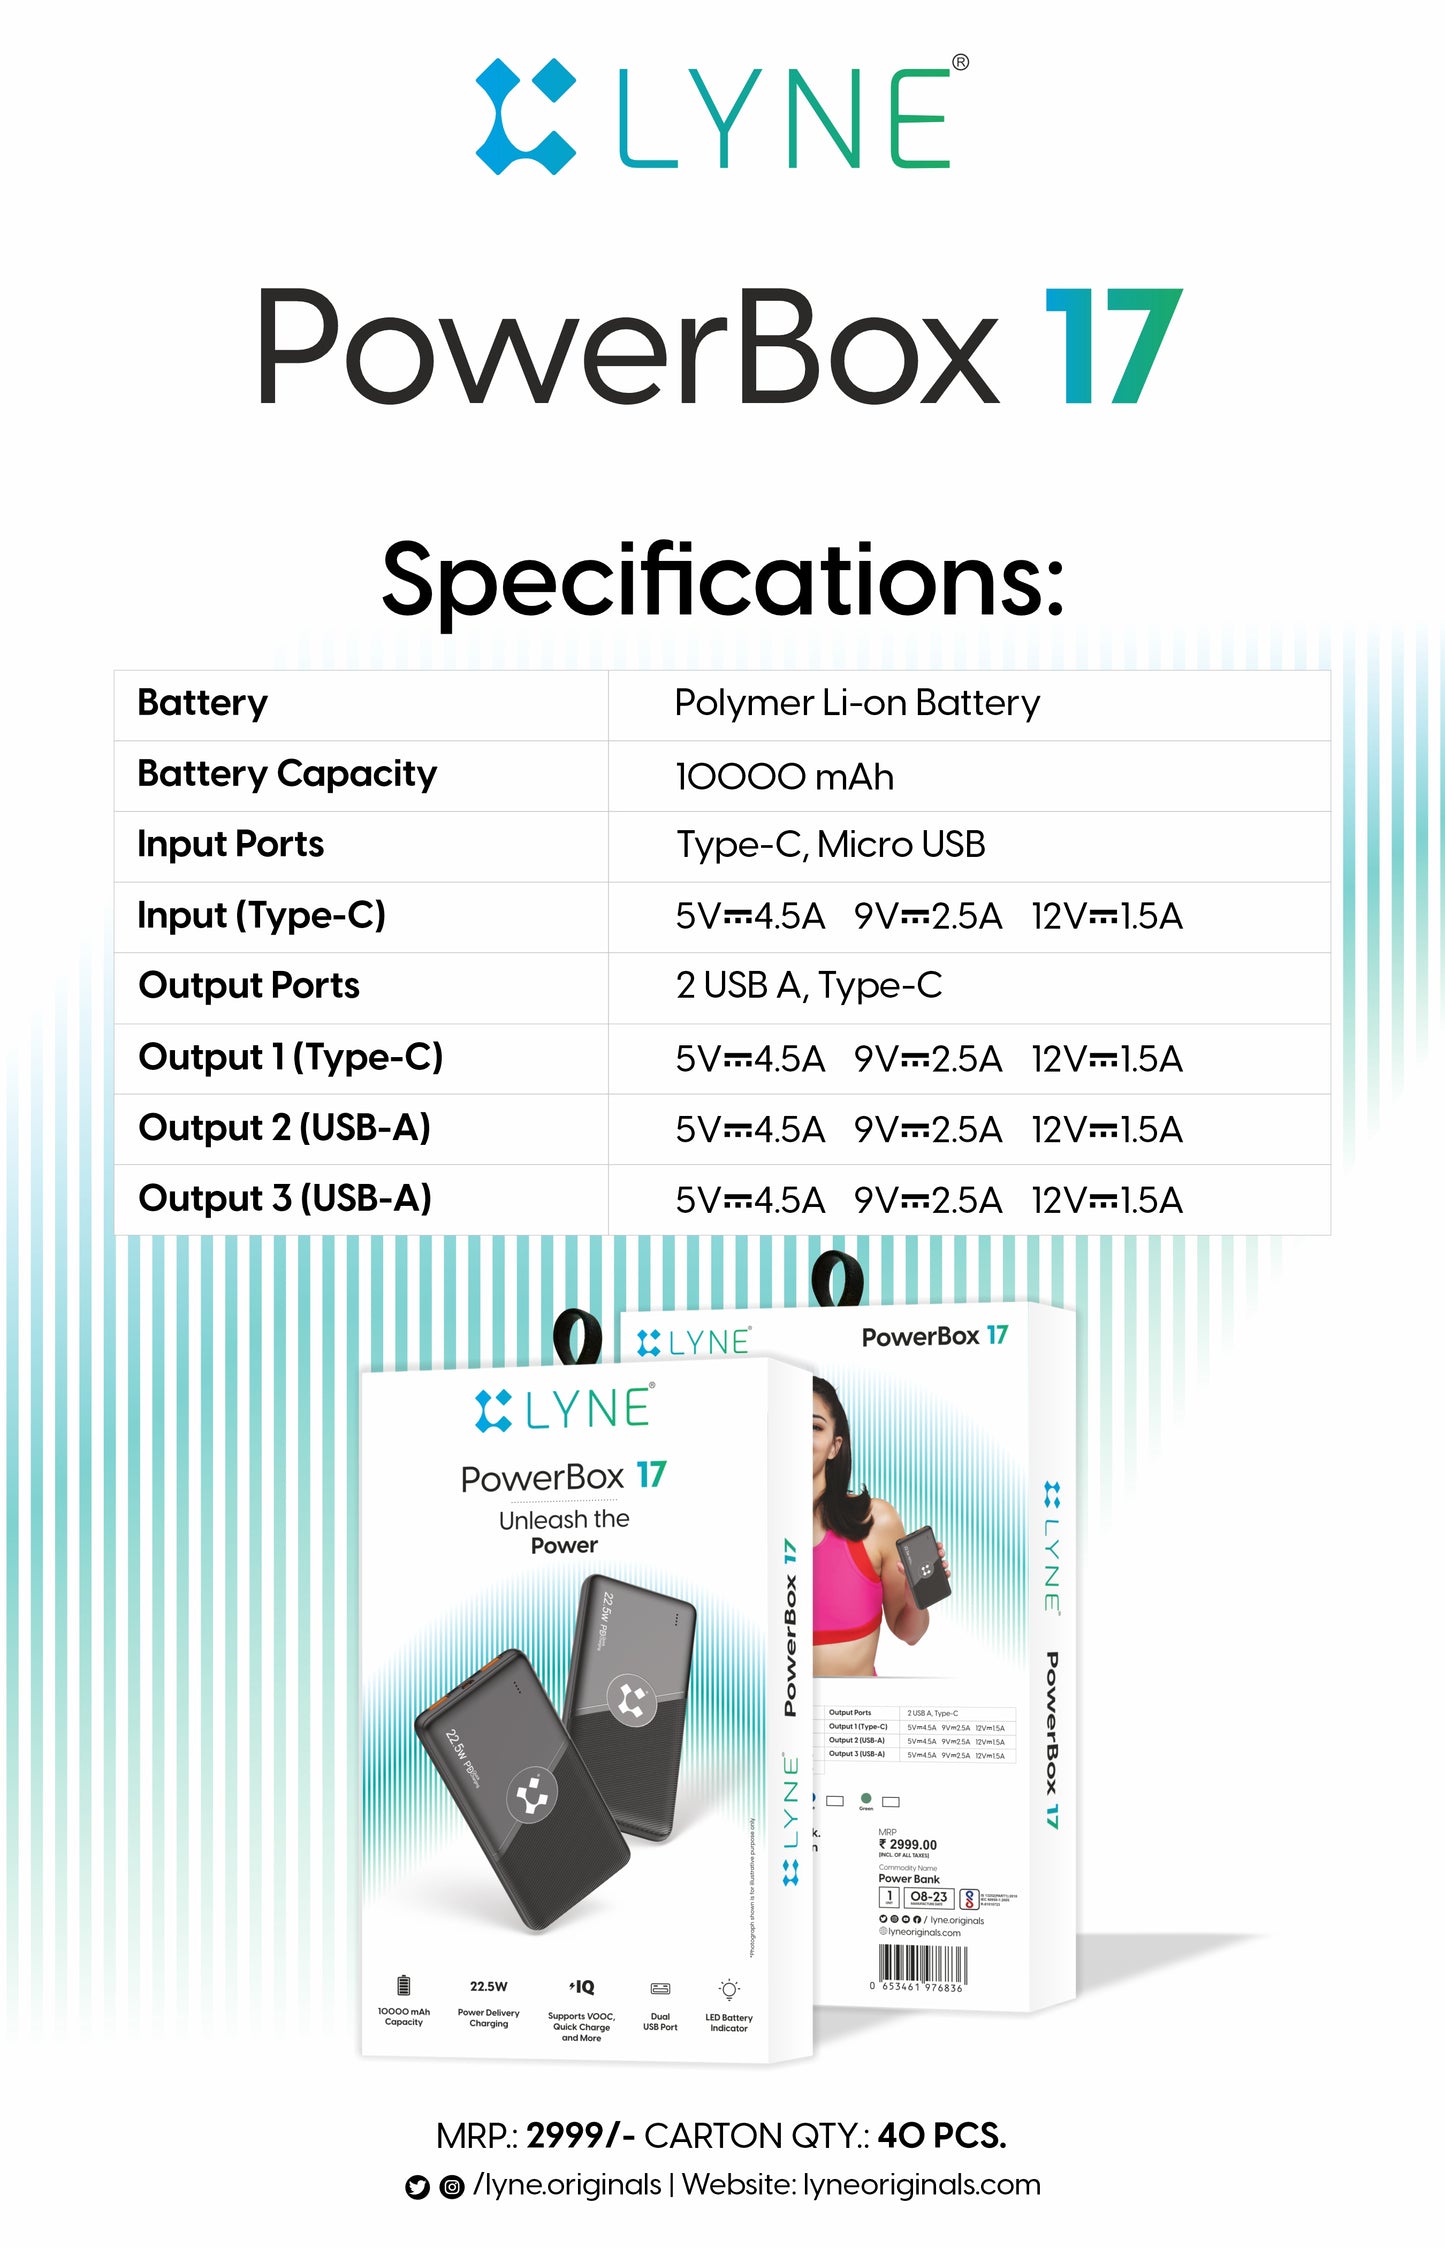 LYNE Powerbox 17 10000 mAh Battery Capacity, 22.5W PD Output, Dual USB Port